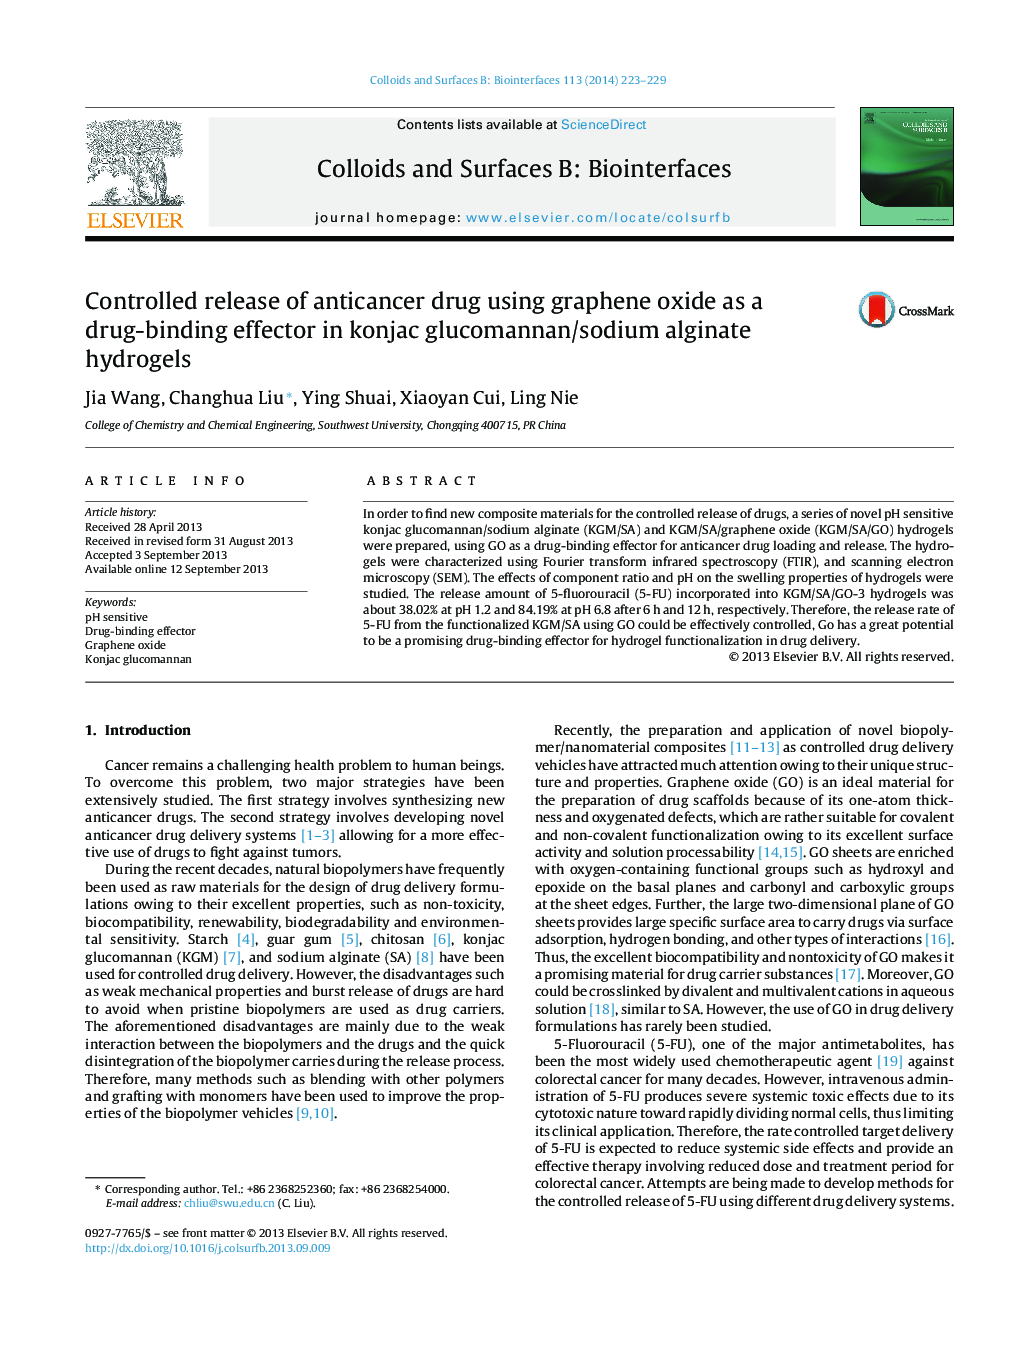 Controlled release of anticancer drug using graphene oxide as a drug-binding effector in konjac glucomannan/sodium alginate hydrogels